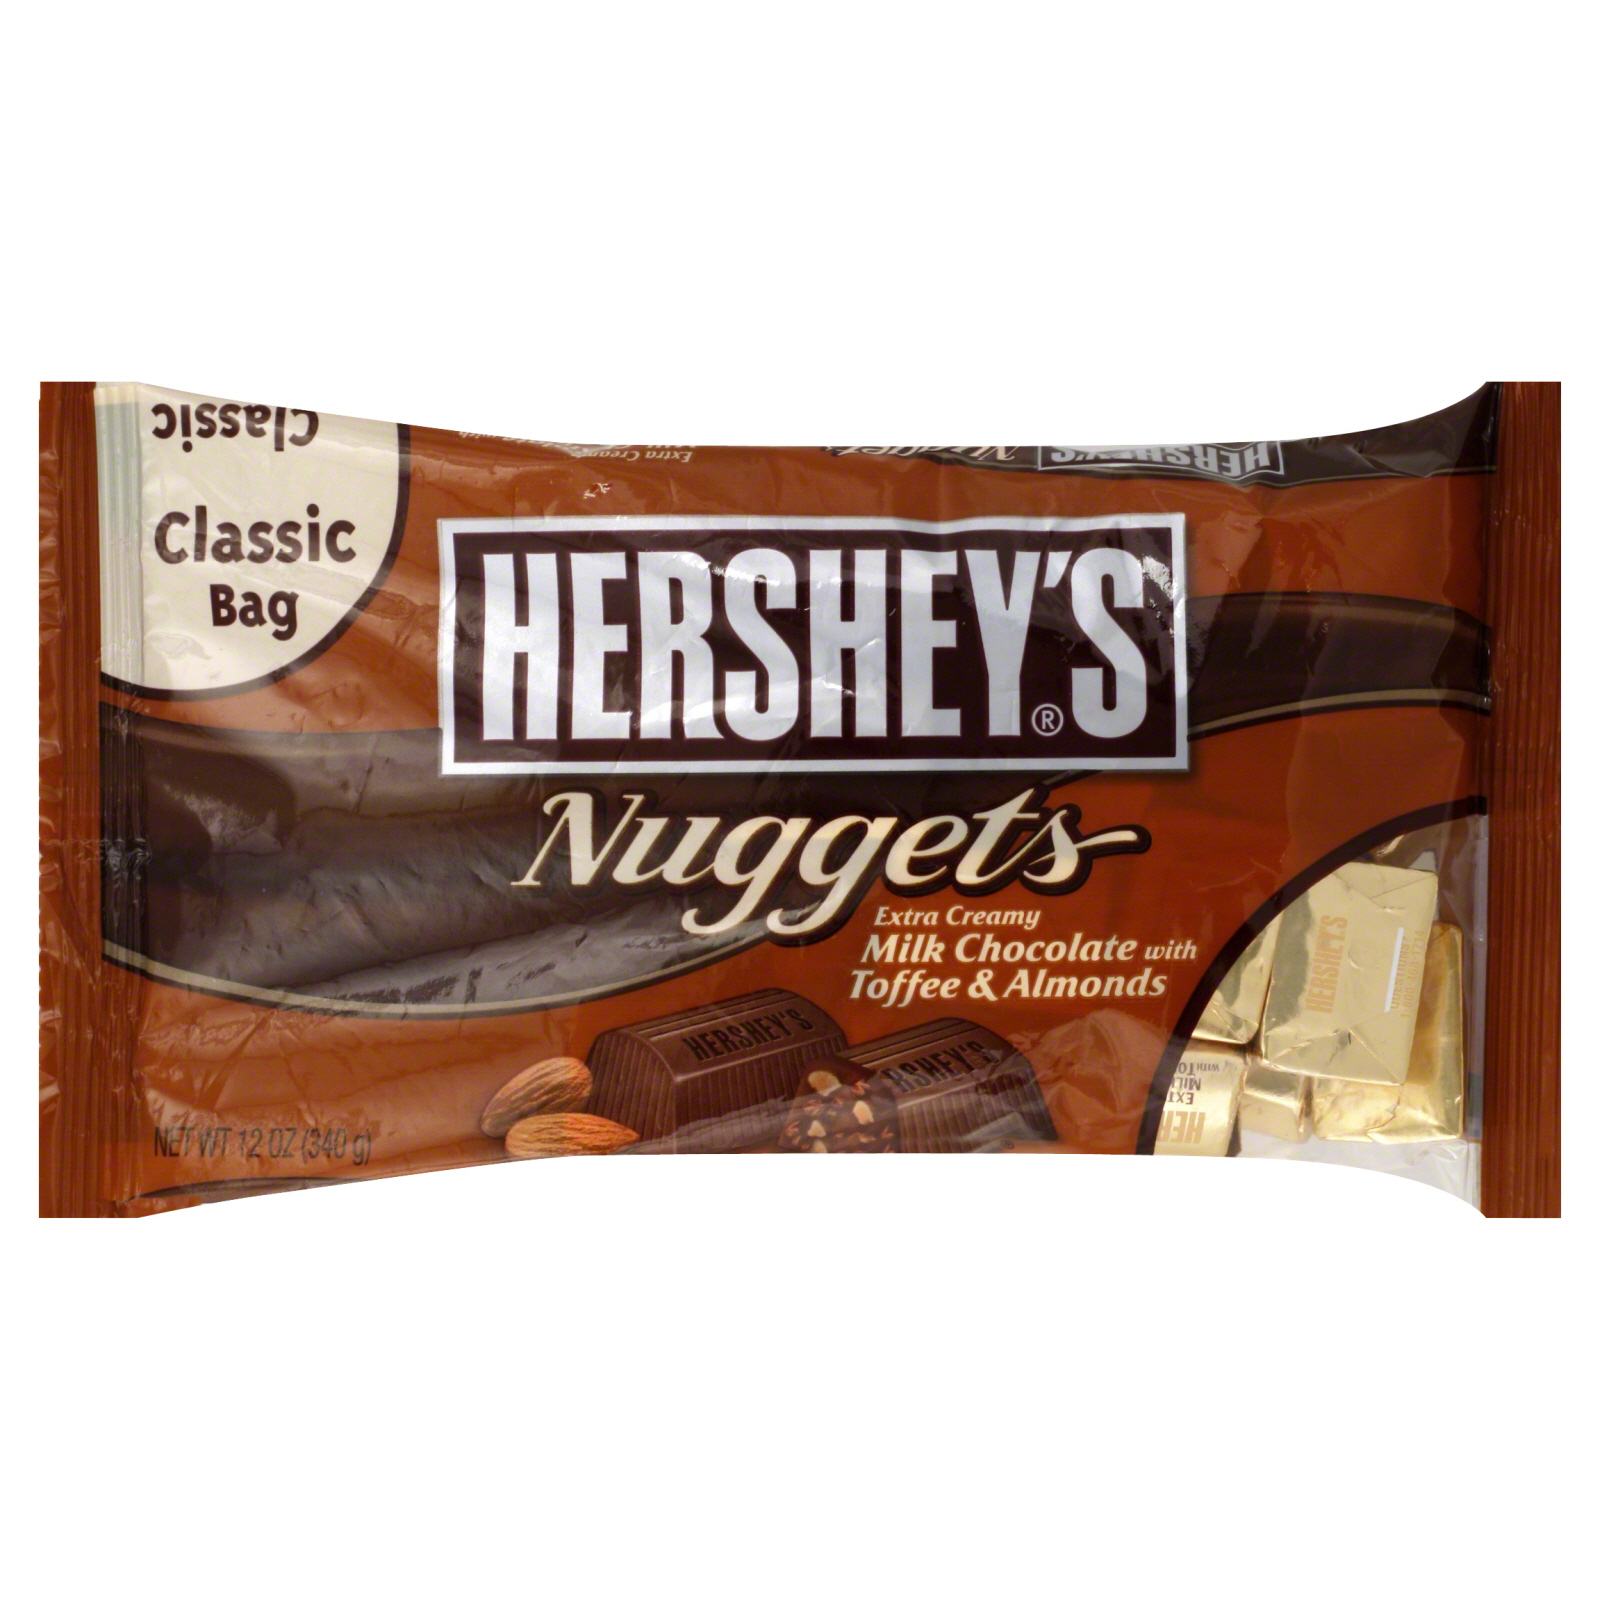 Hershey's Nuggets Milk Chocolate, Extra Creamy, with Toffee & Almonds, 12 oz (340 g)